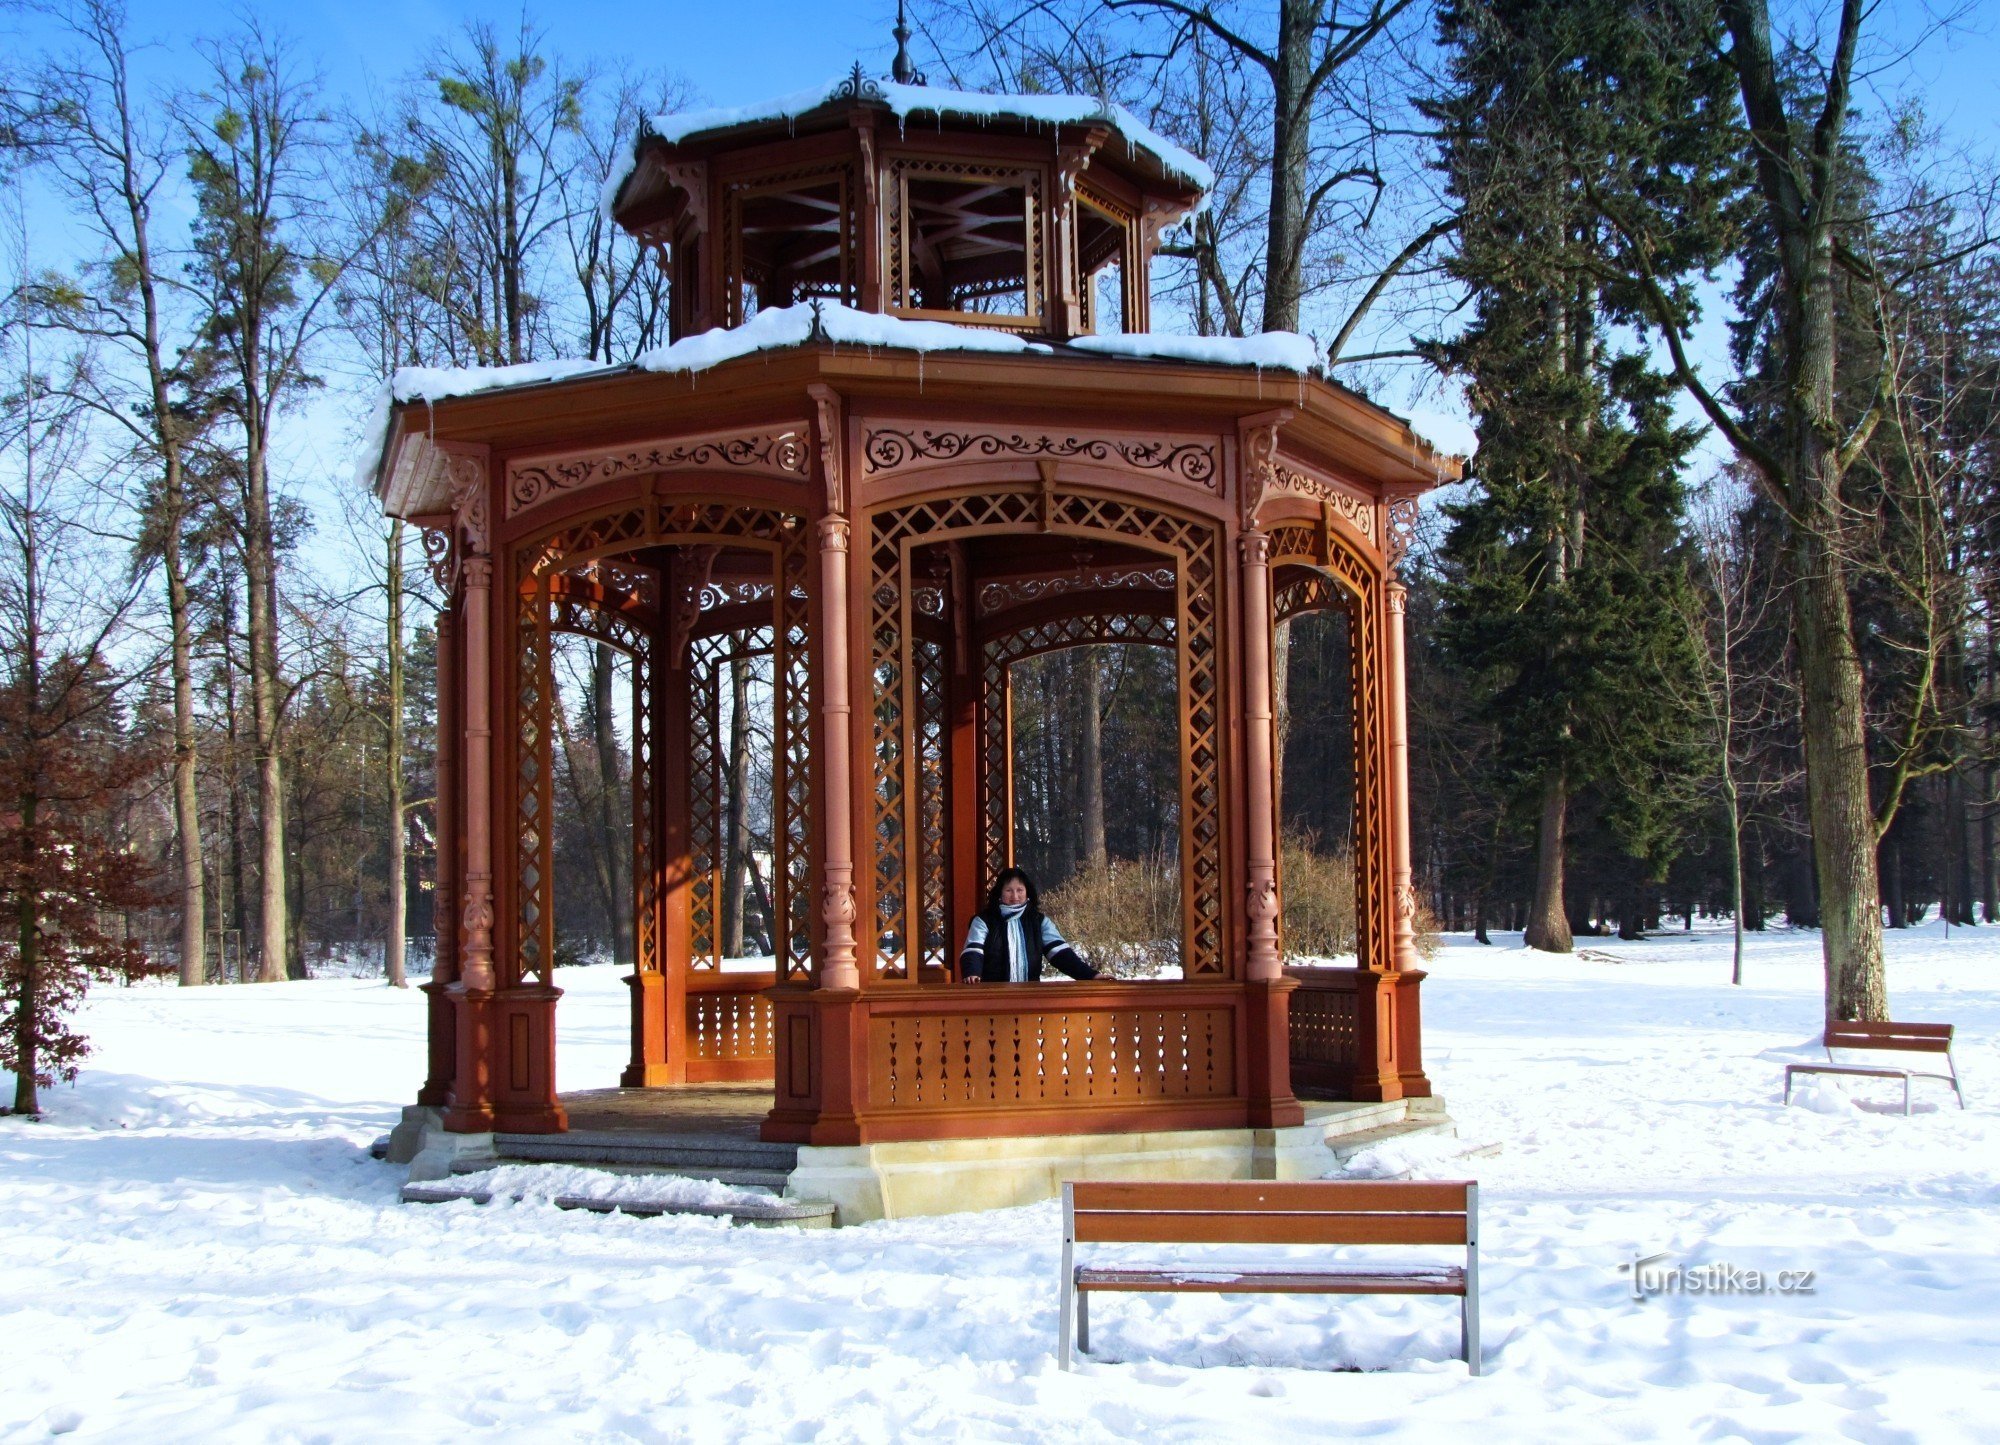 Winter walk - Wallachian museum in nature - in Rožnov pod Radhoštěm